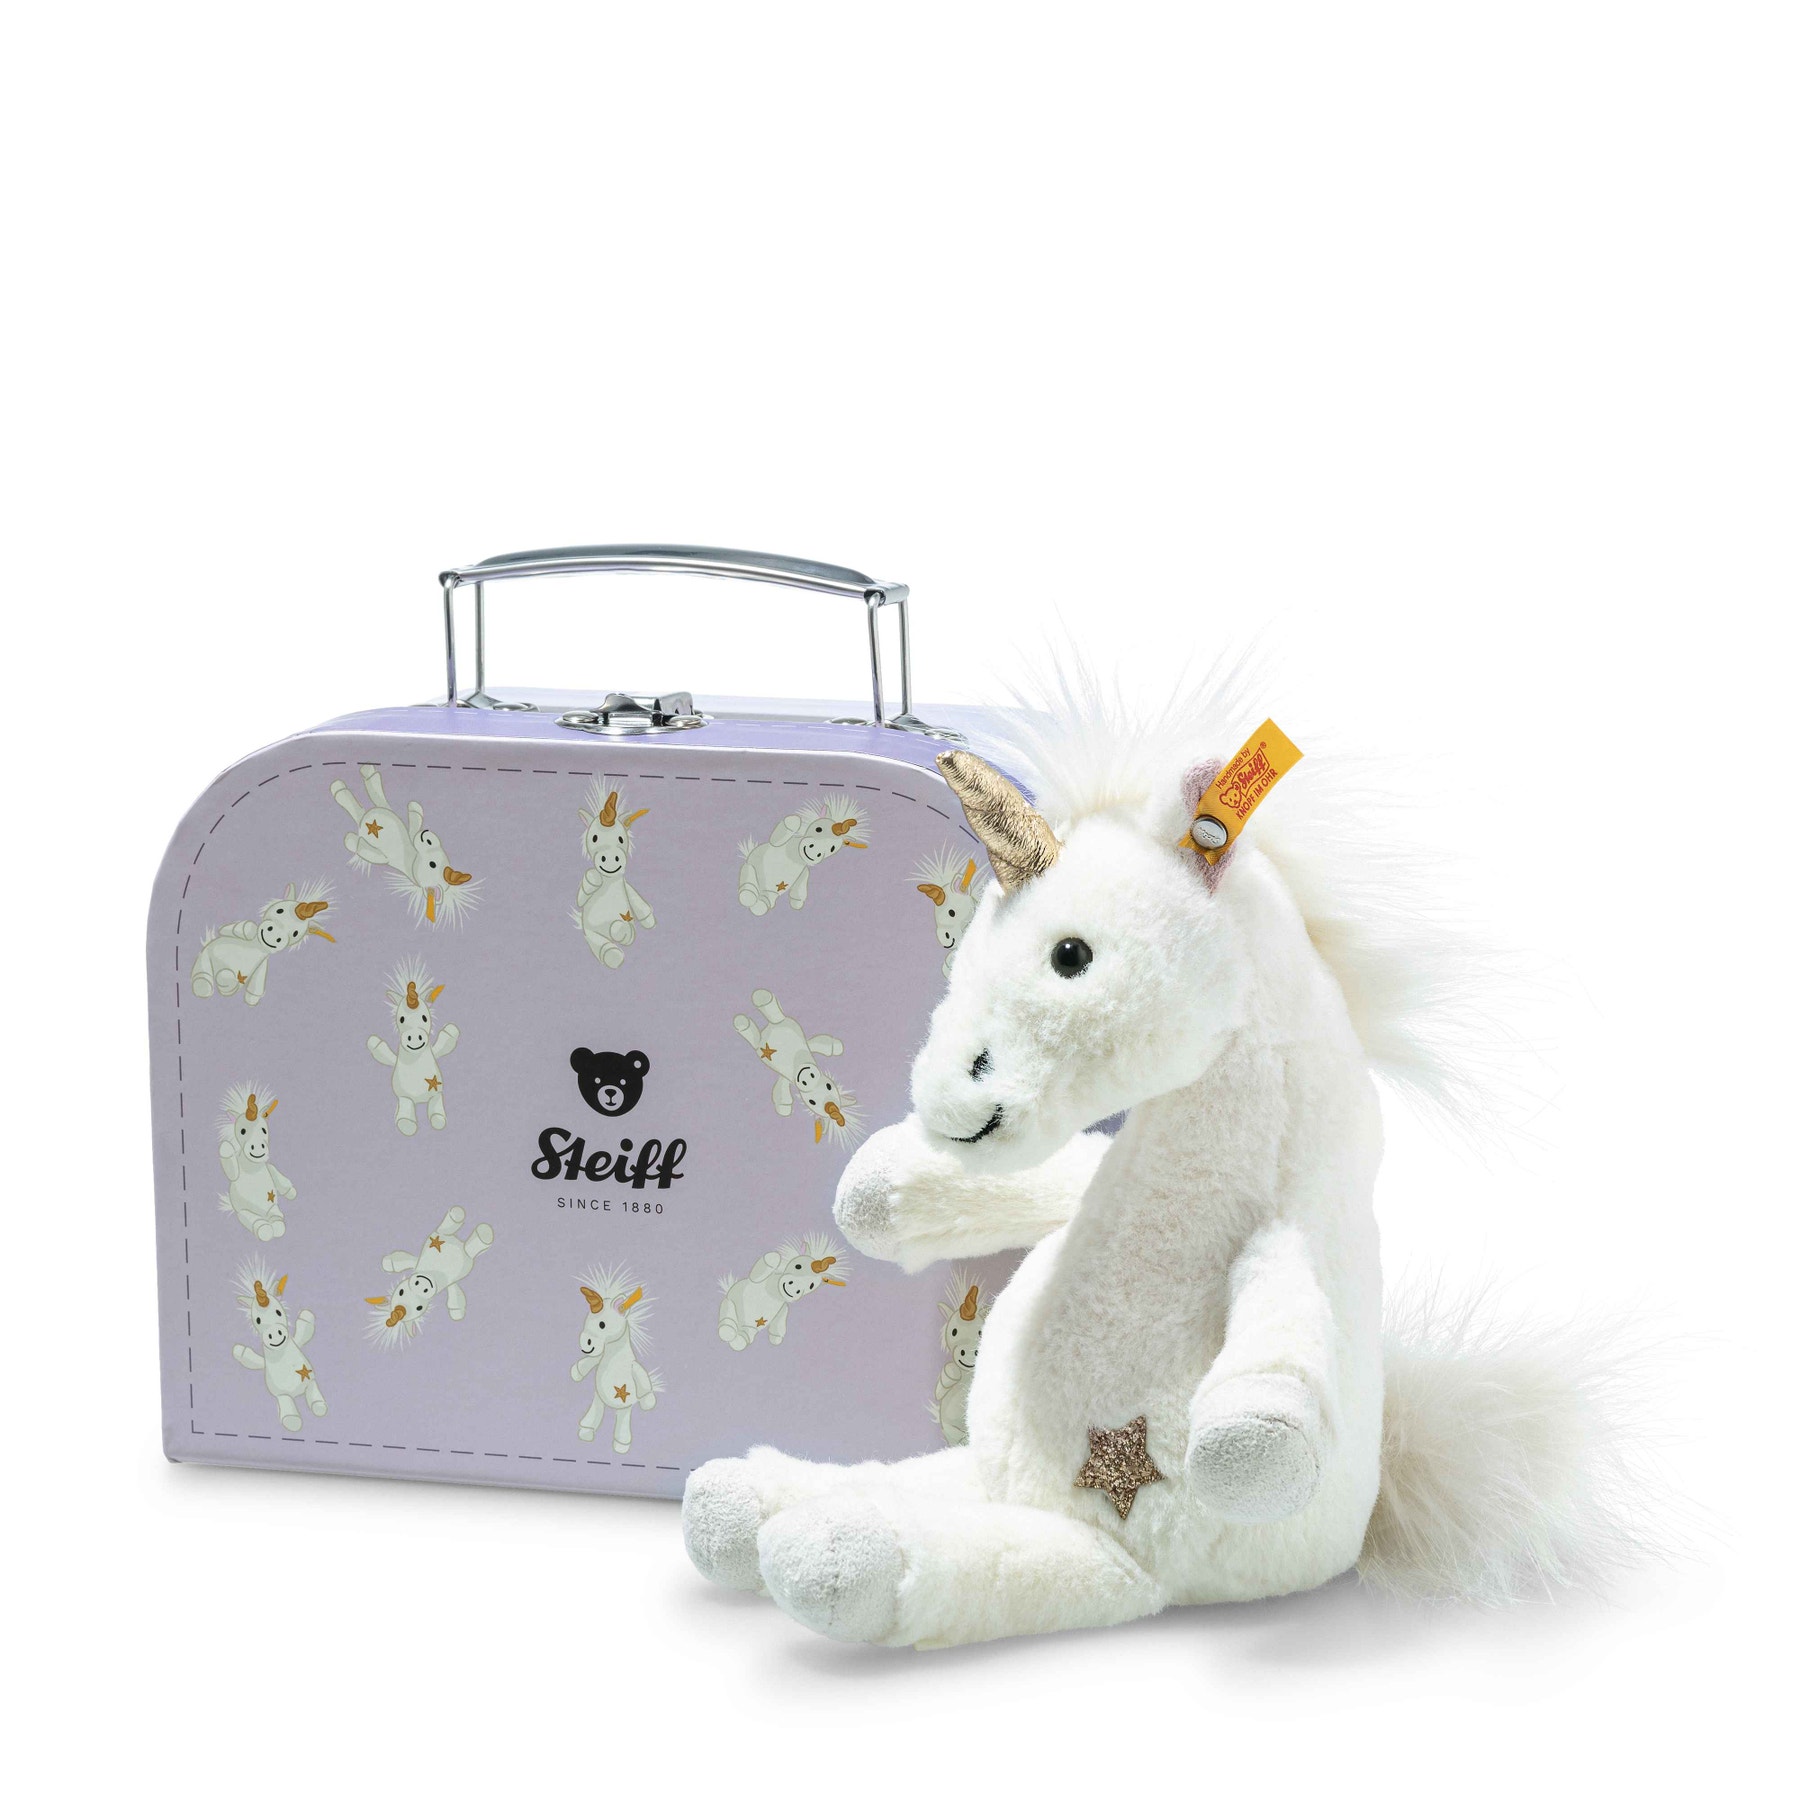 Licorne-pantin Unica dans sa valise